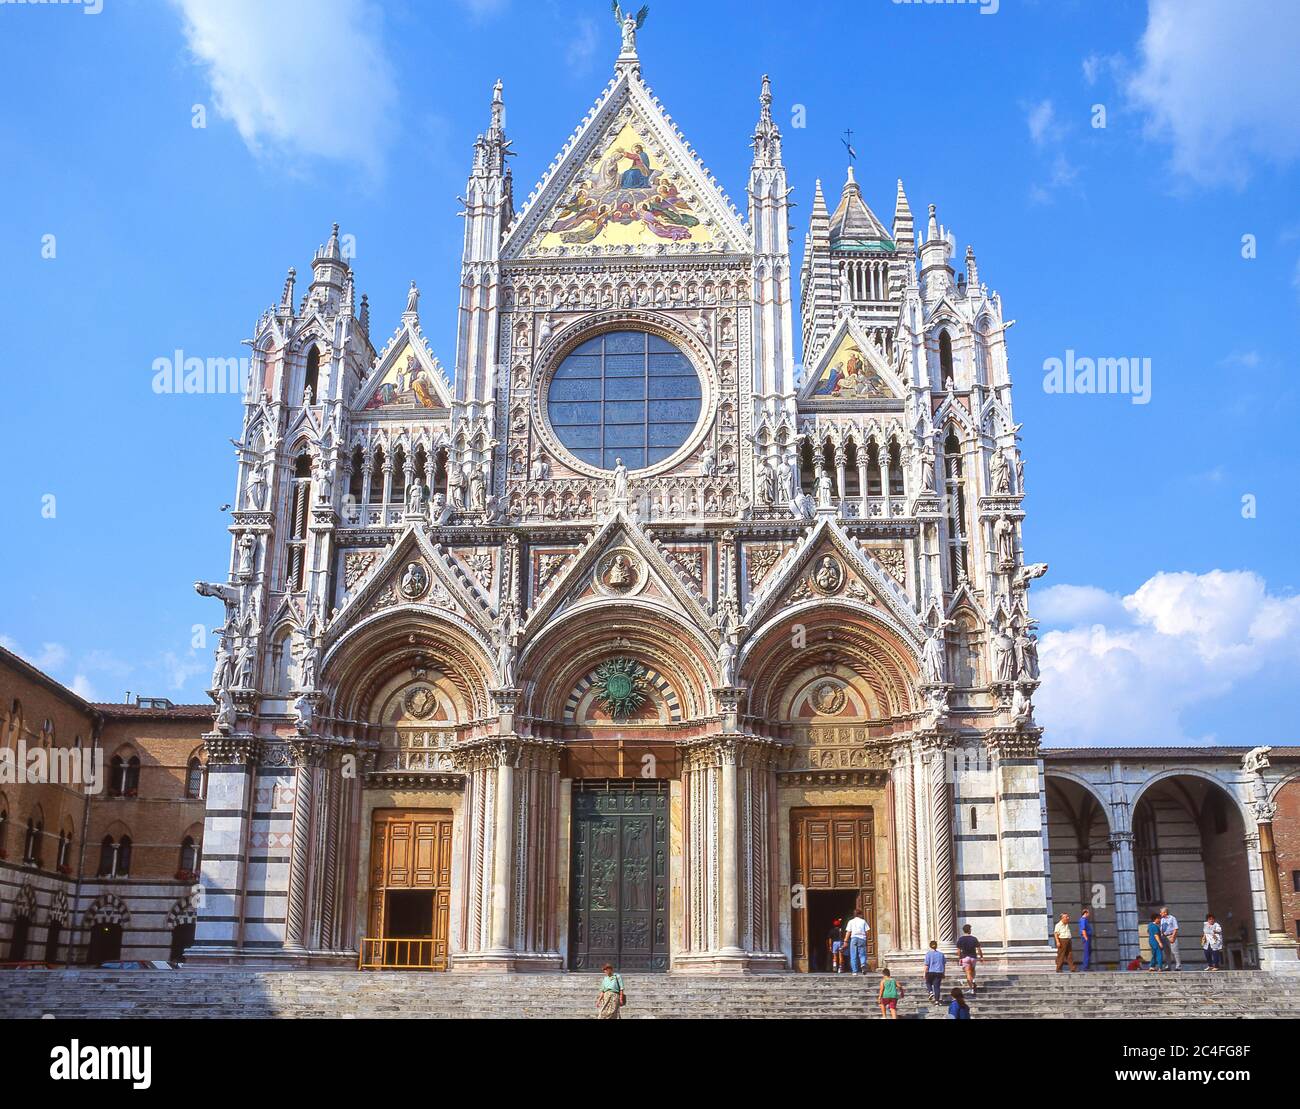 Duomo di Siena (Cattedrale di Siena), Siena (Siena), Provincia di Siena, Regione Toscana, Italia Foto Stock